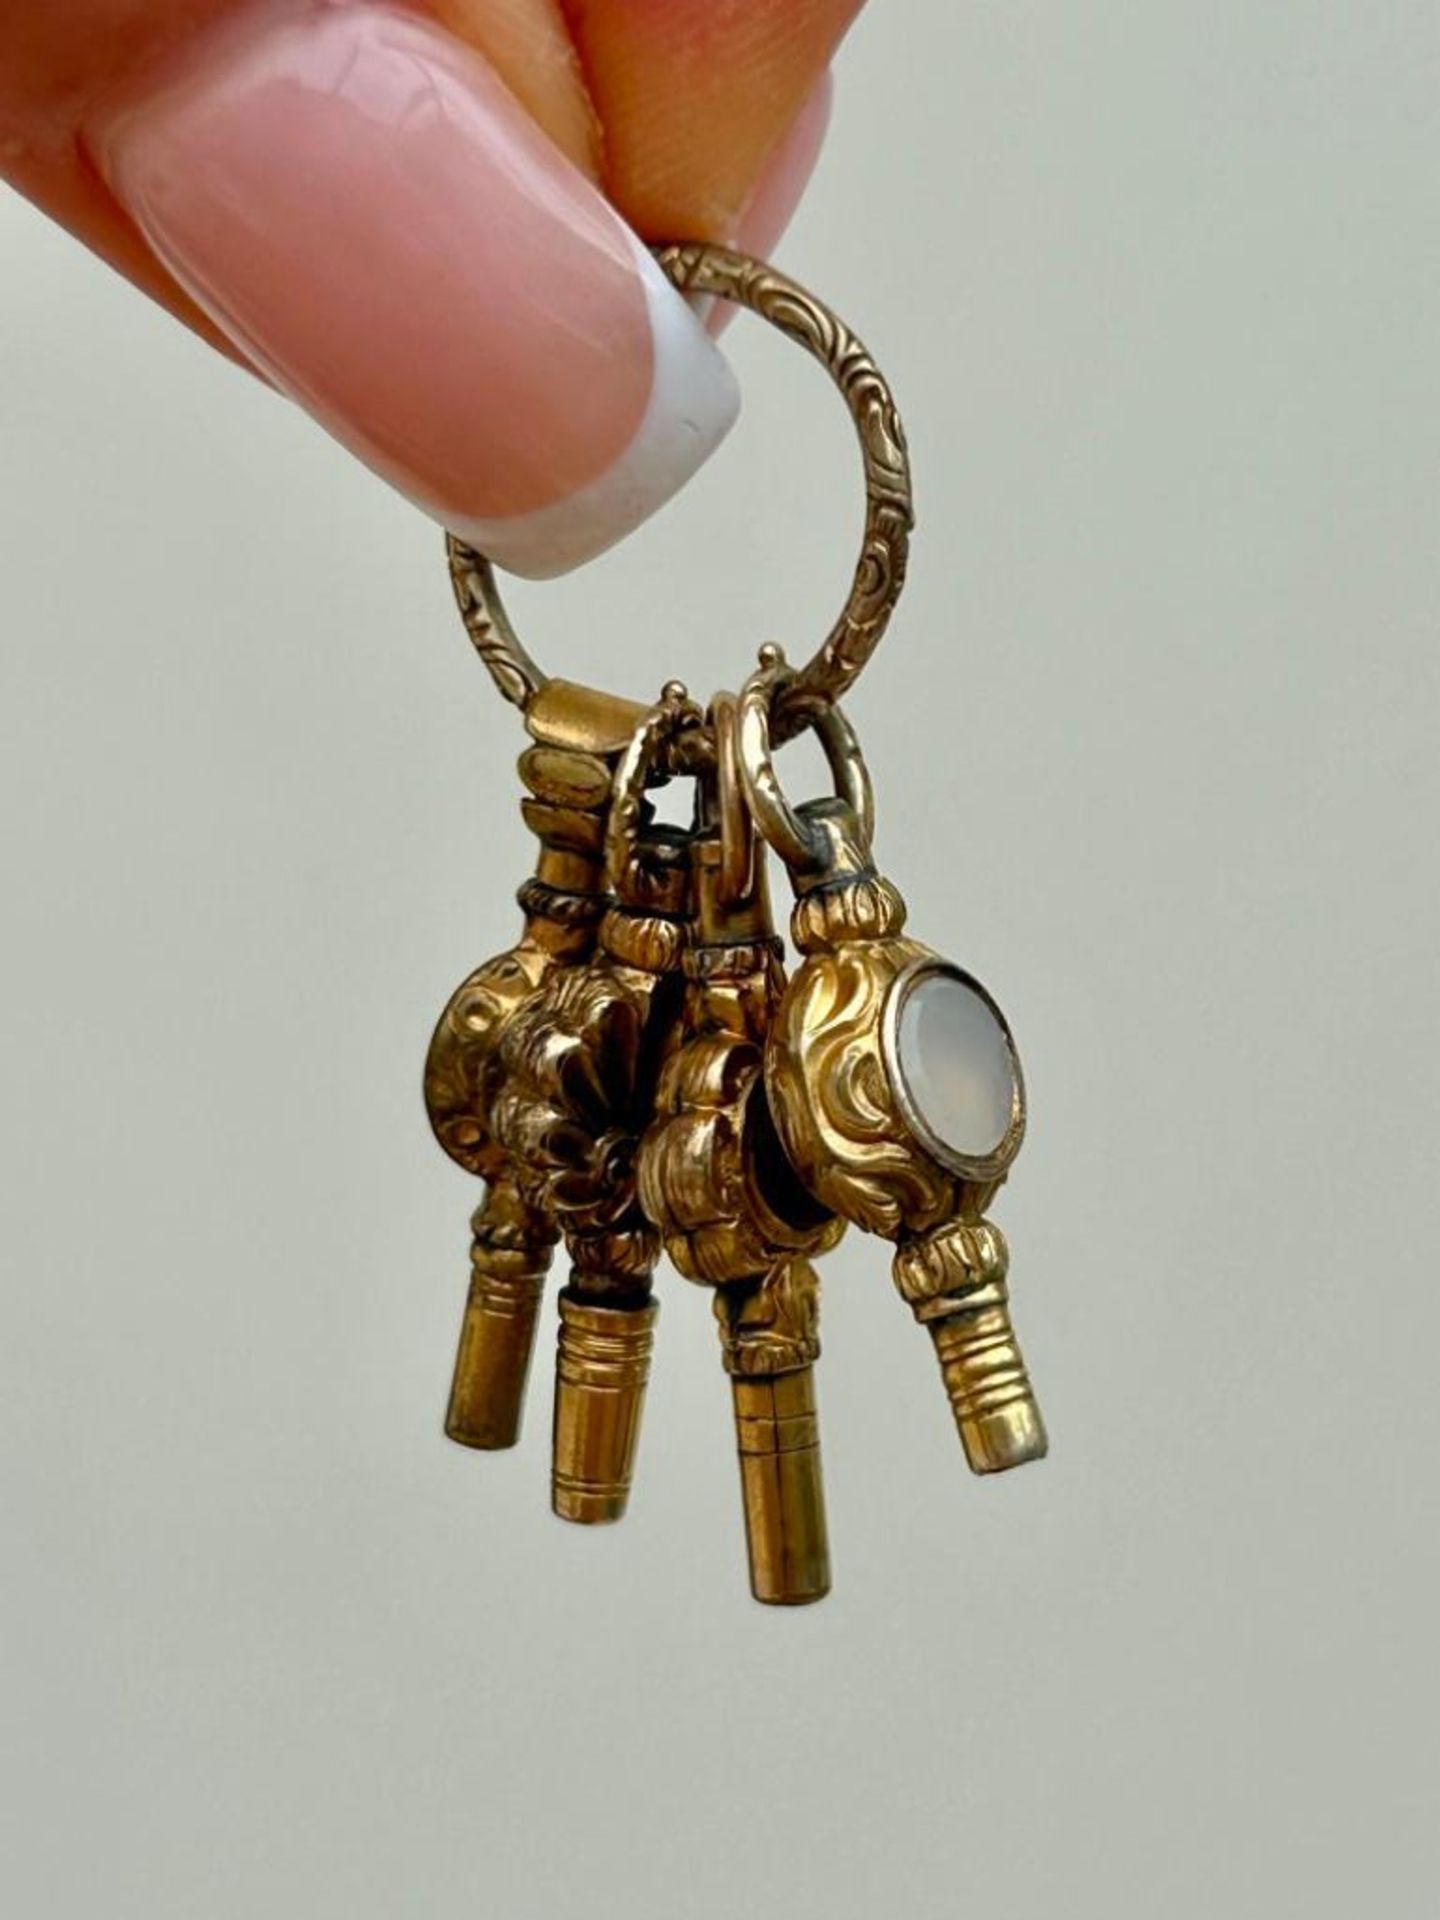 Antique Georgian Era Spilt Ring with 4 Keys - Image 4 of 4